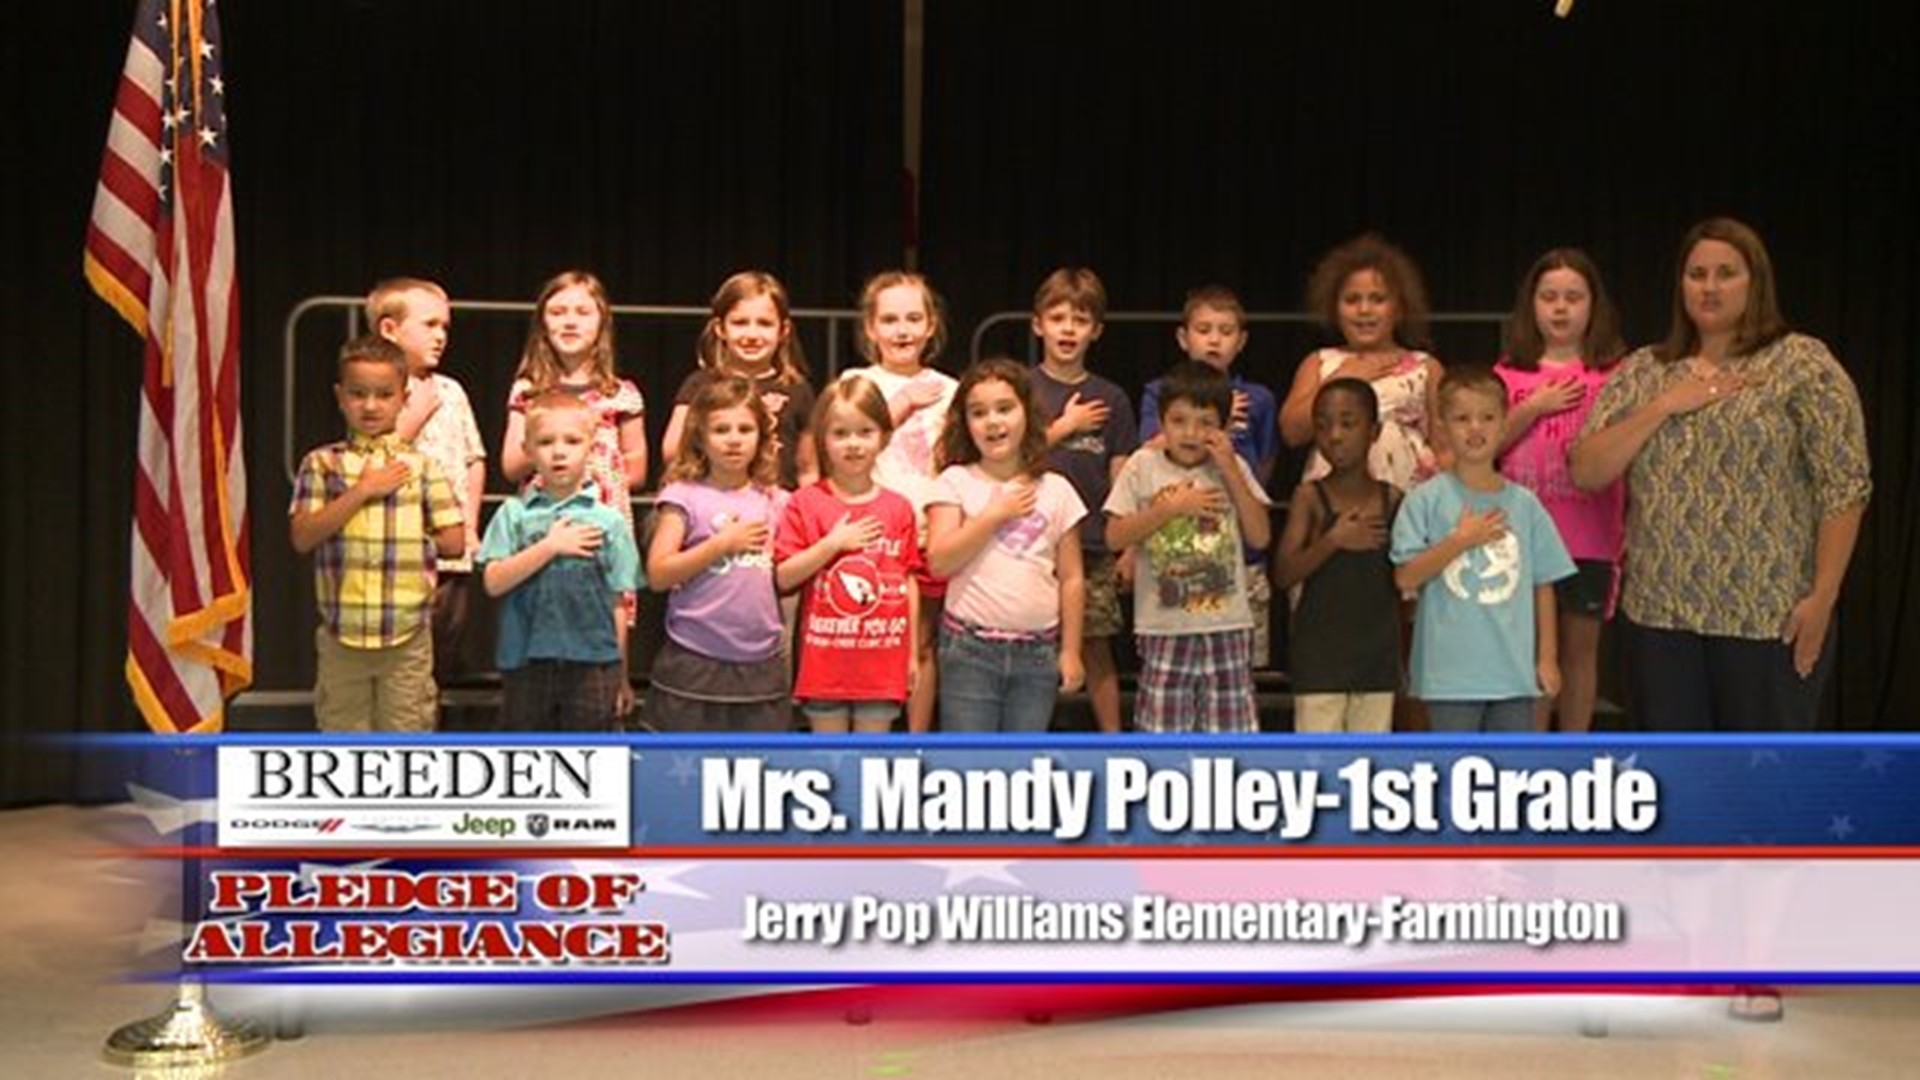 Jerry Pop Williams Elementary, Farmington - Mrs. Mandy Polley - 1st Grade